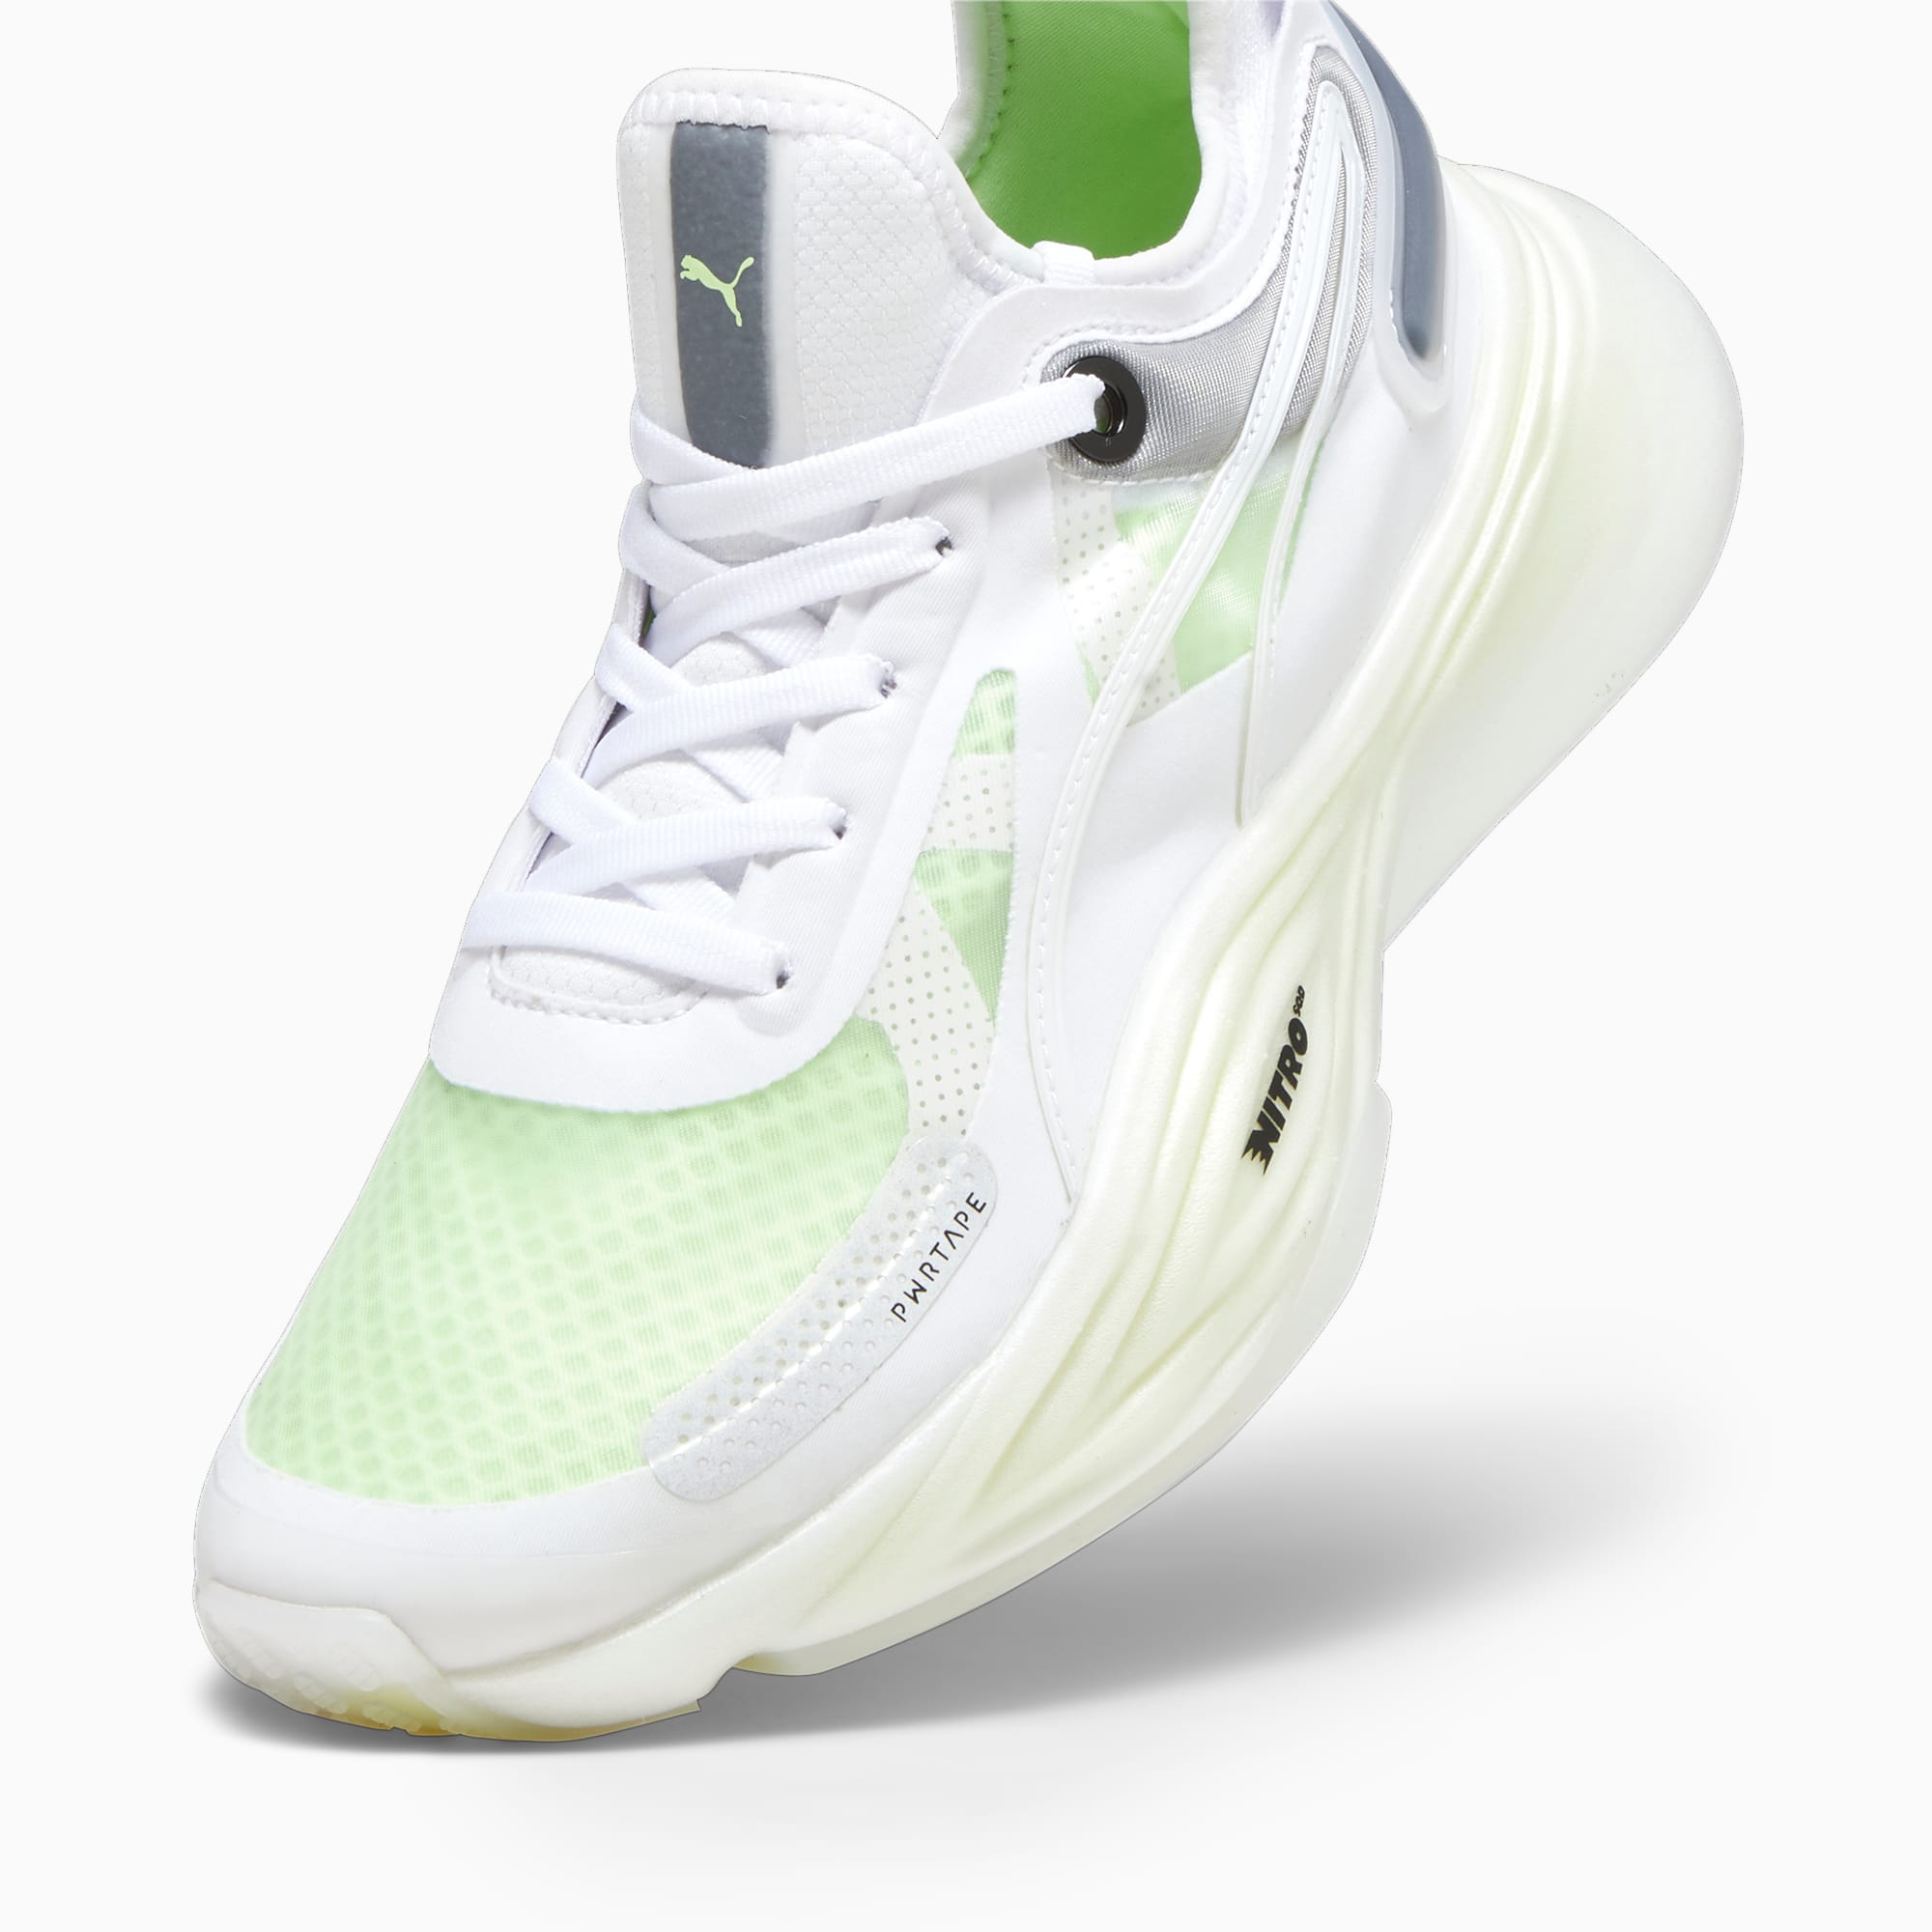 PUMA Pwr Nitro Sqd Women's Training Shoes, White/Speed Green, Size 35,5, Shoes